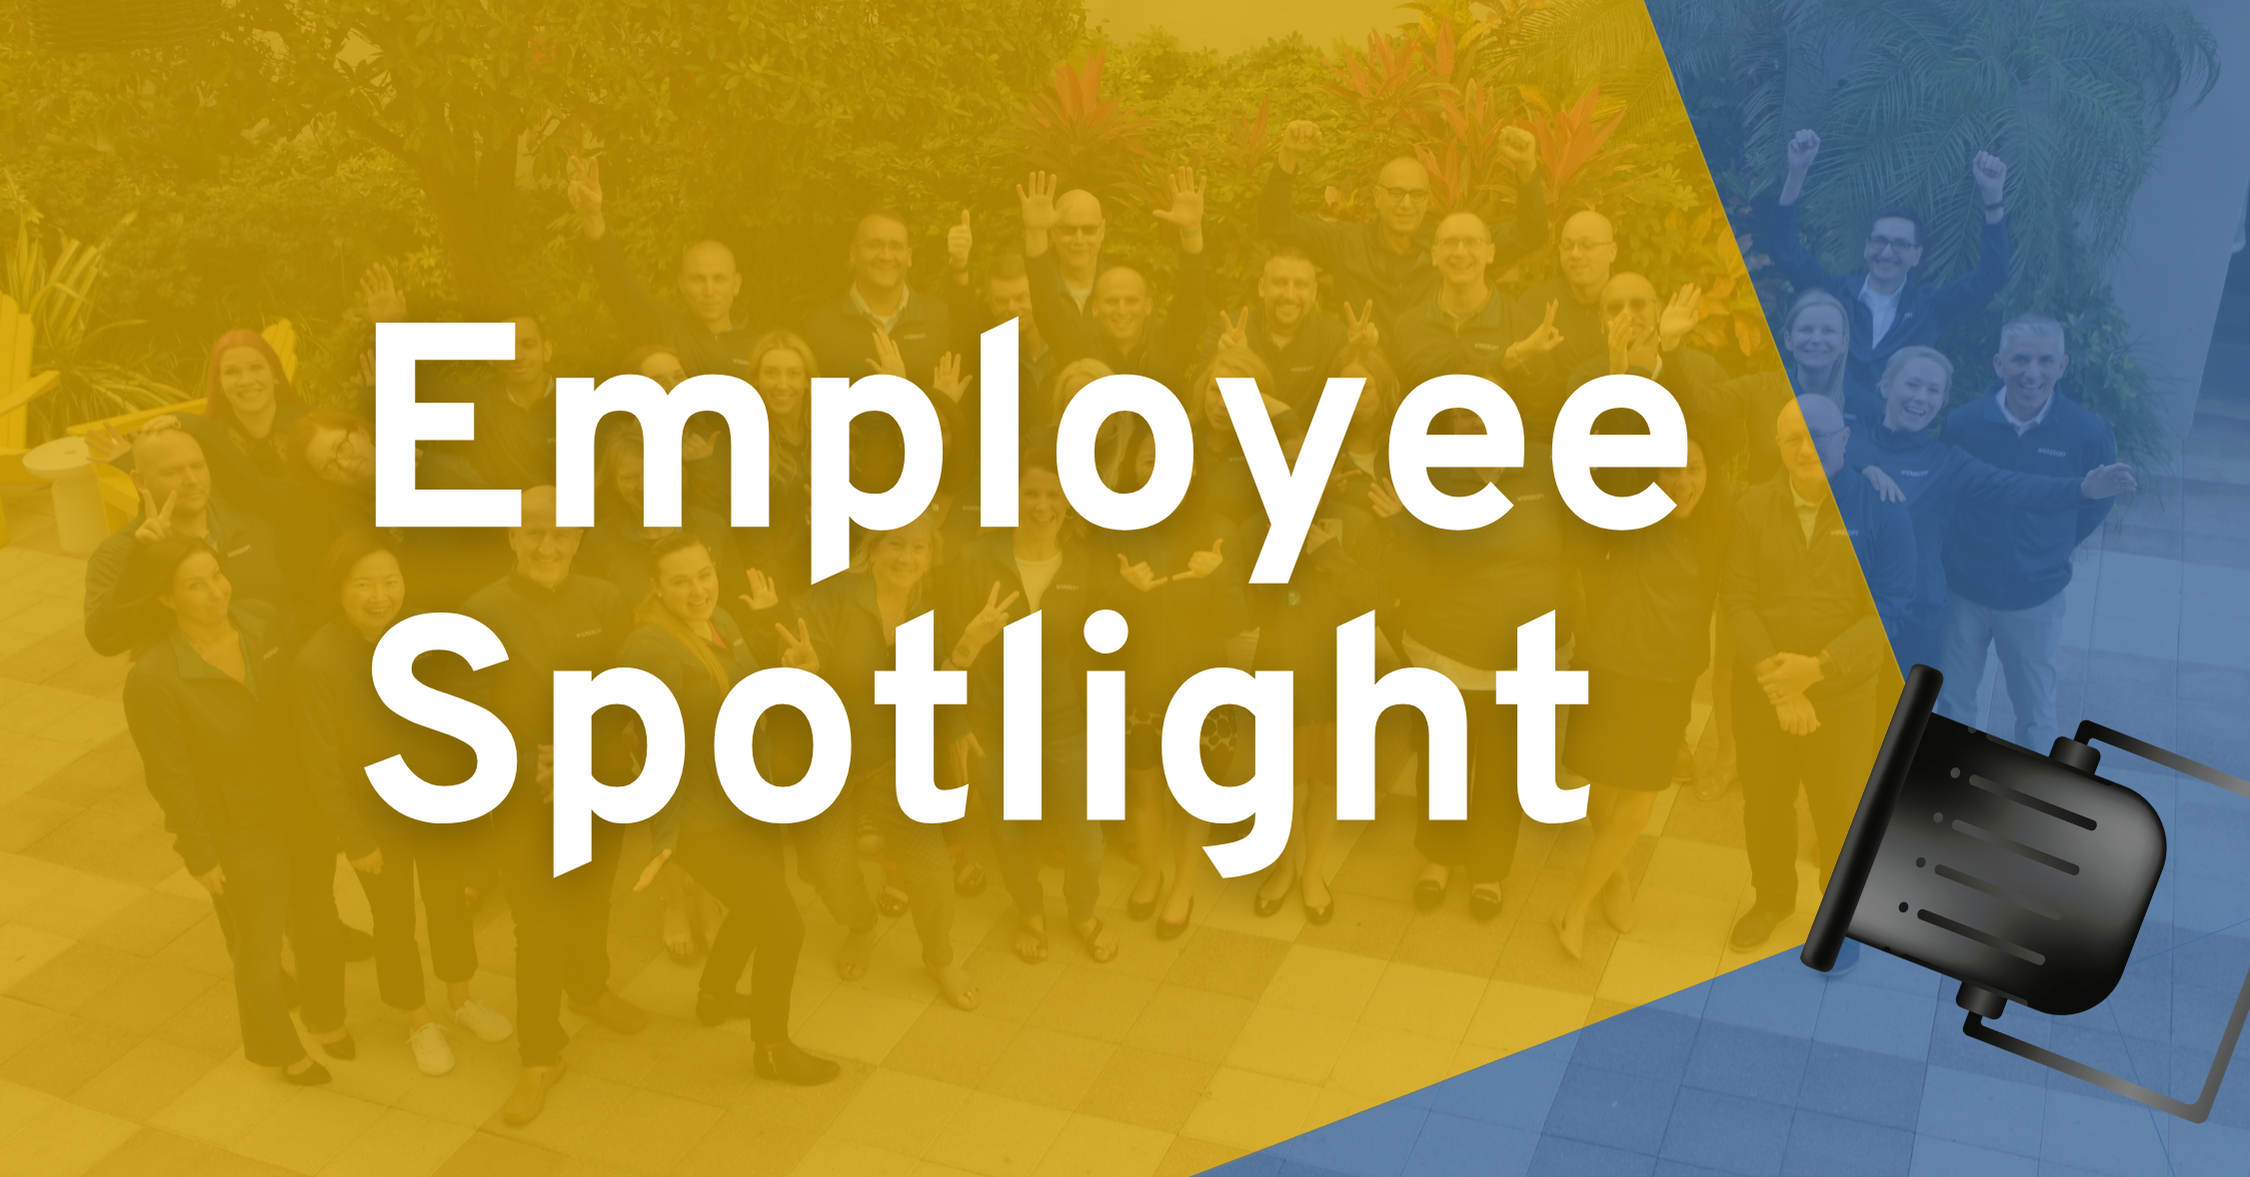 Employee Spotlight - Wicresoft Promotes Amanda Reyer